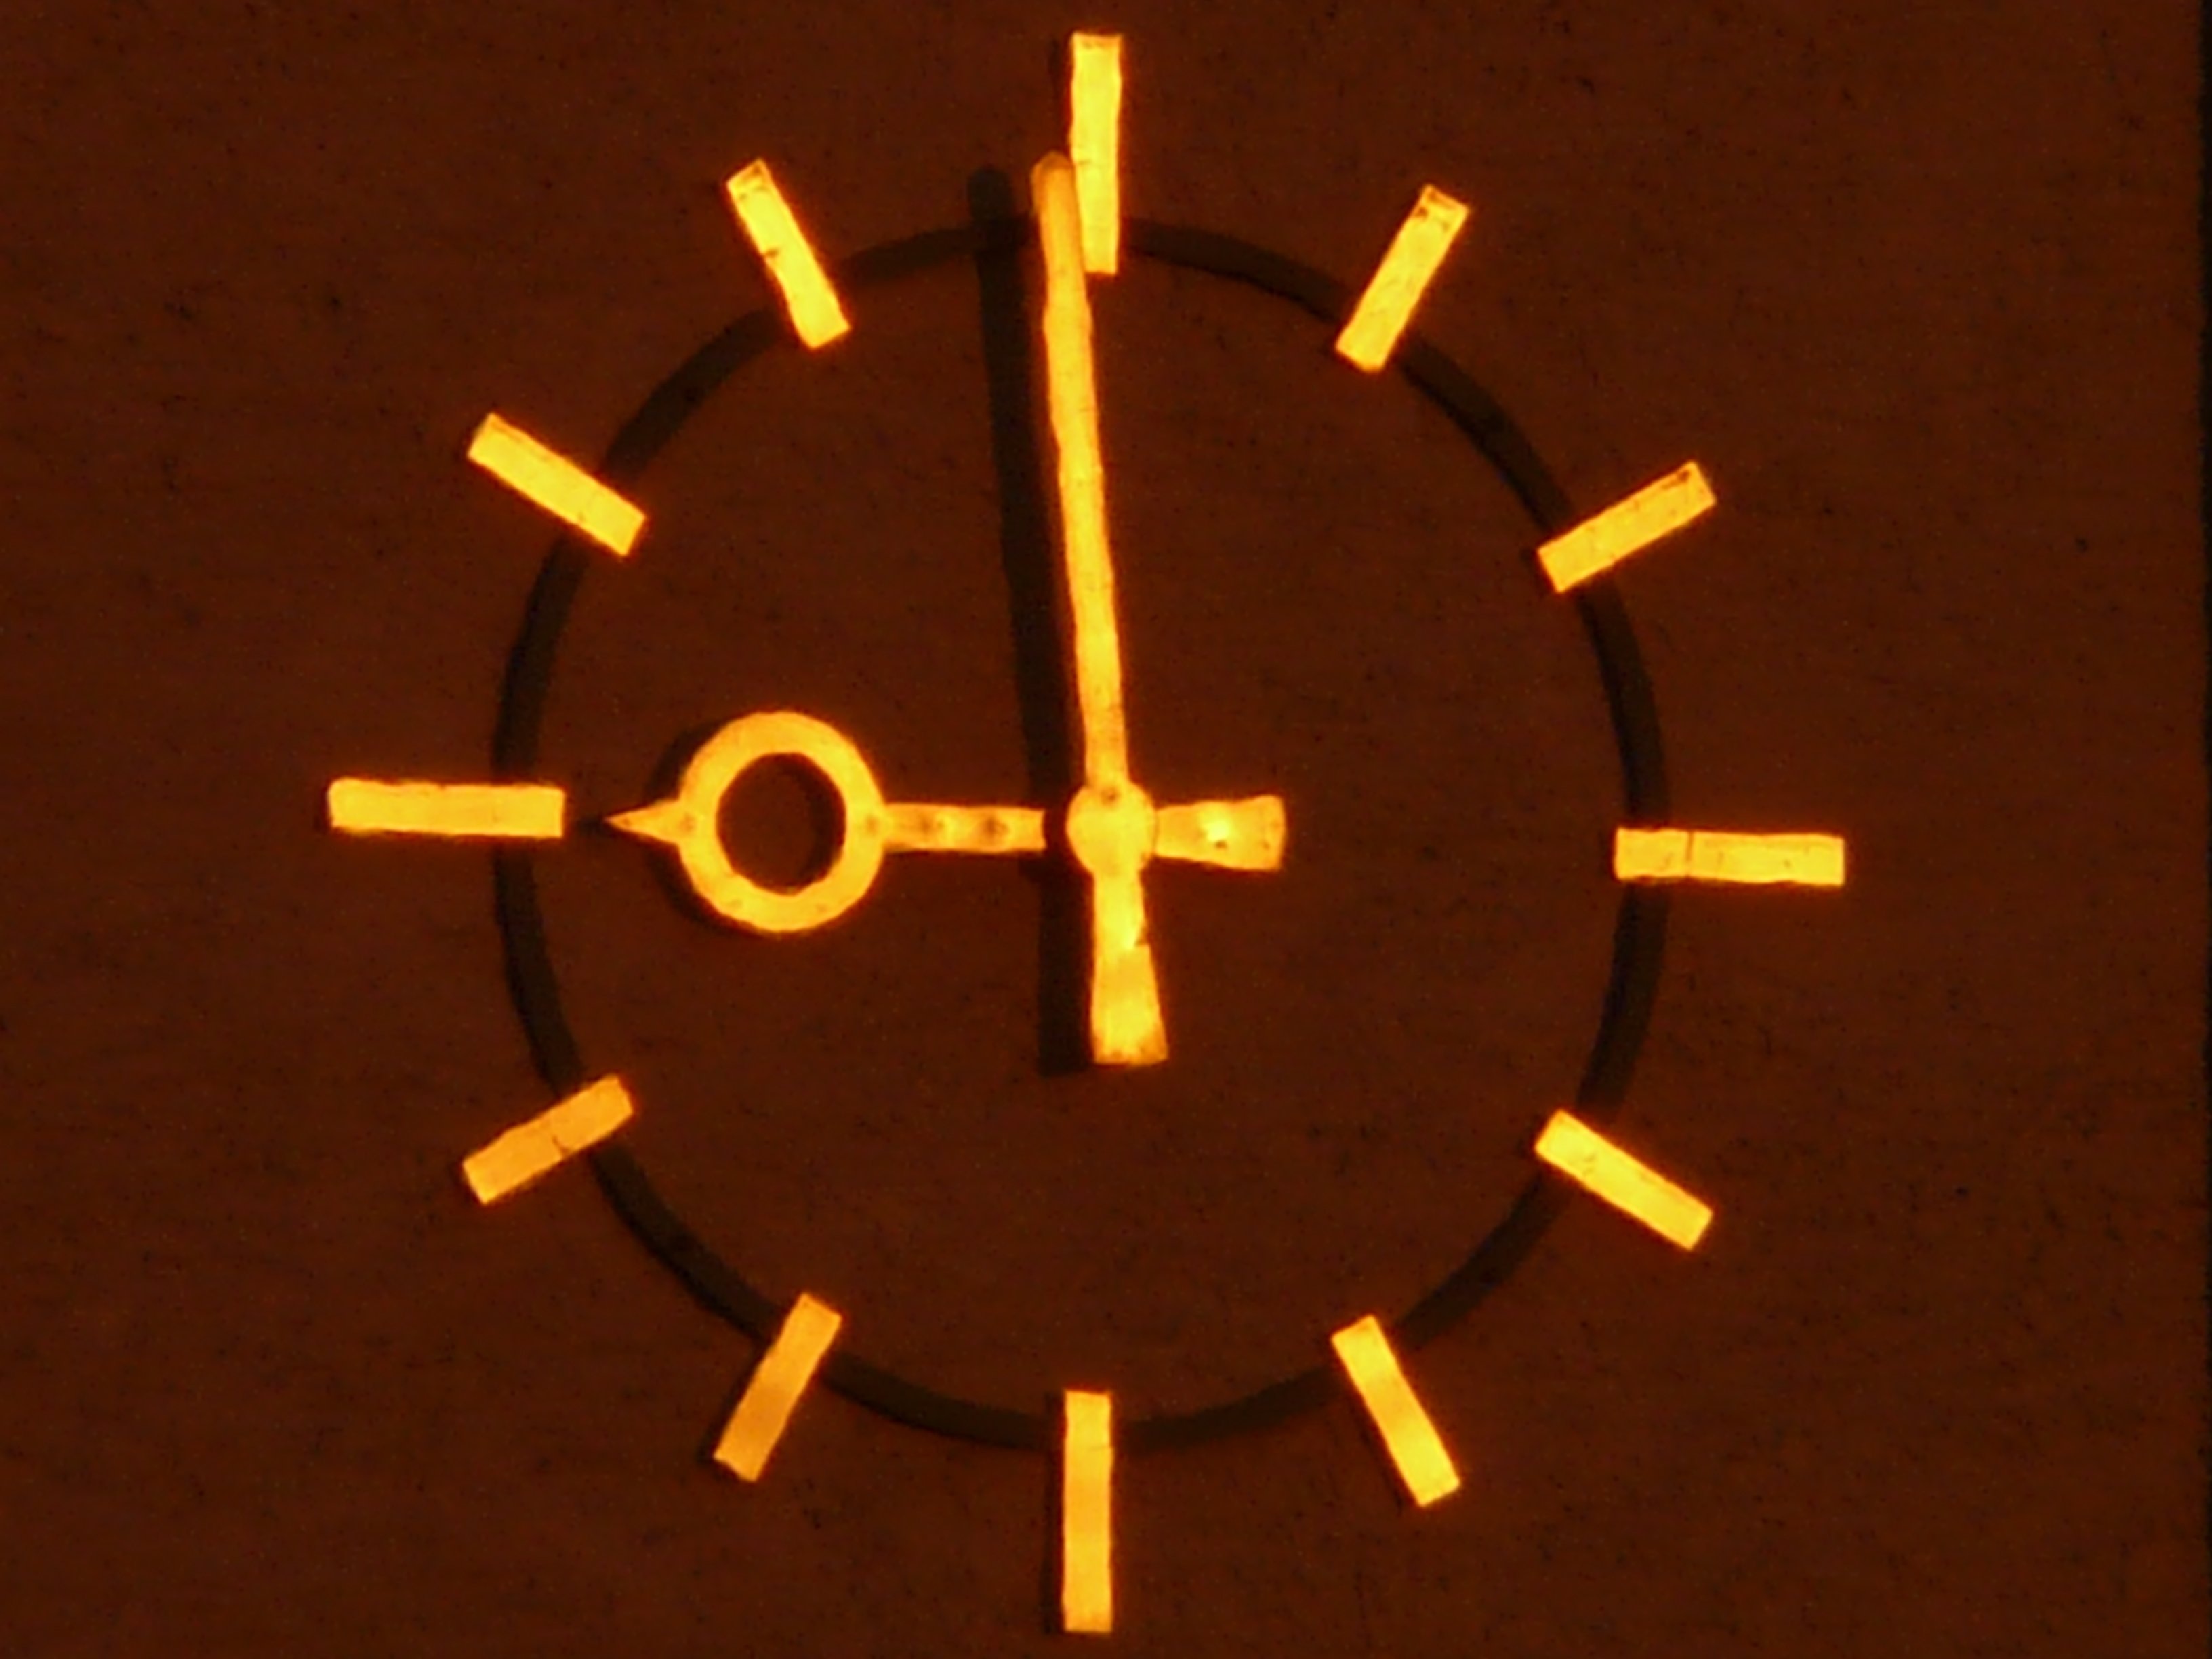 brown and black analog wall clock